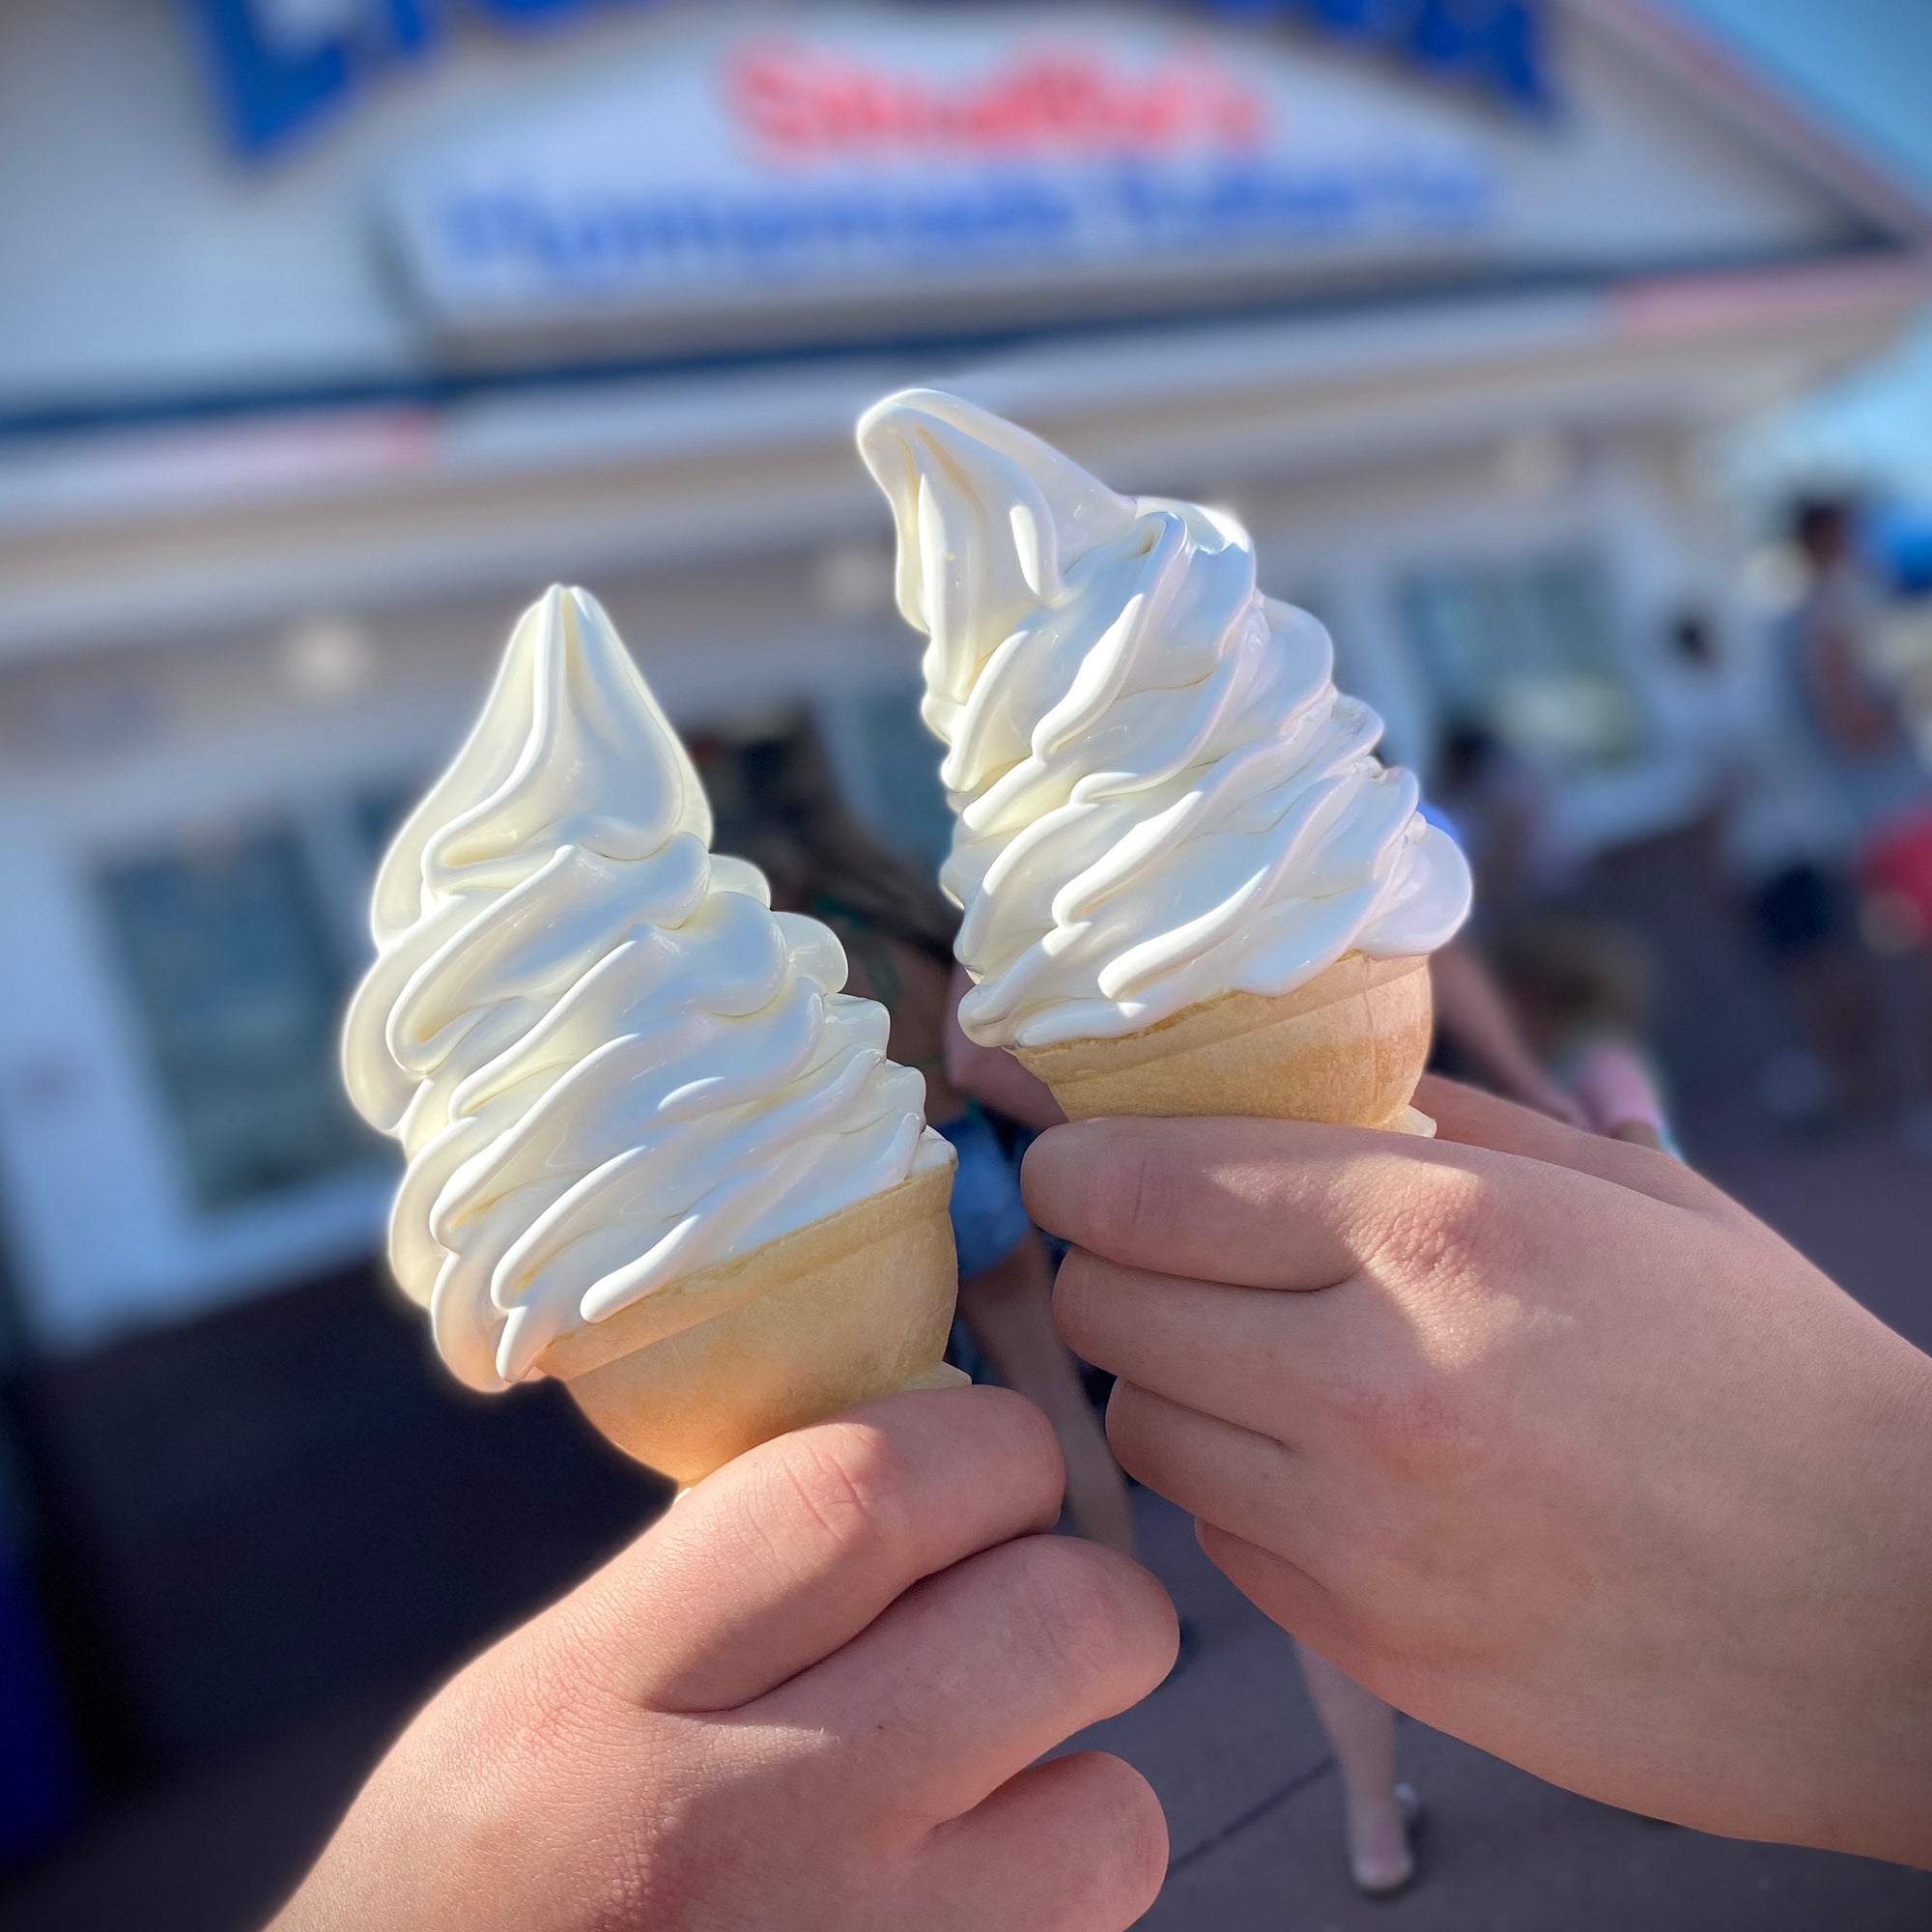 Two Strollo's Lighthouse vanilla soft serve ice cream cones